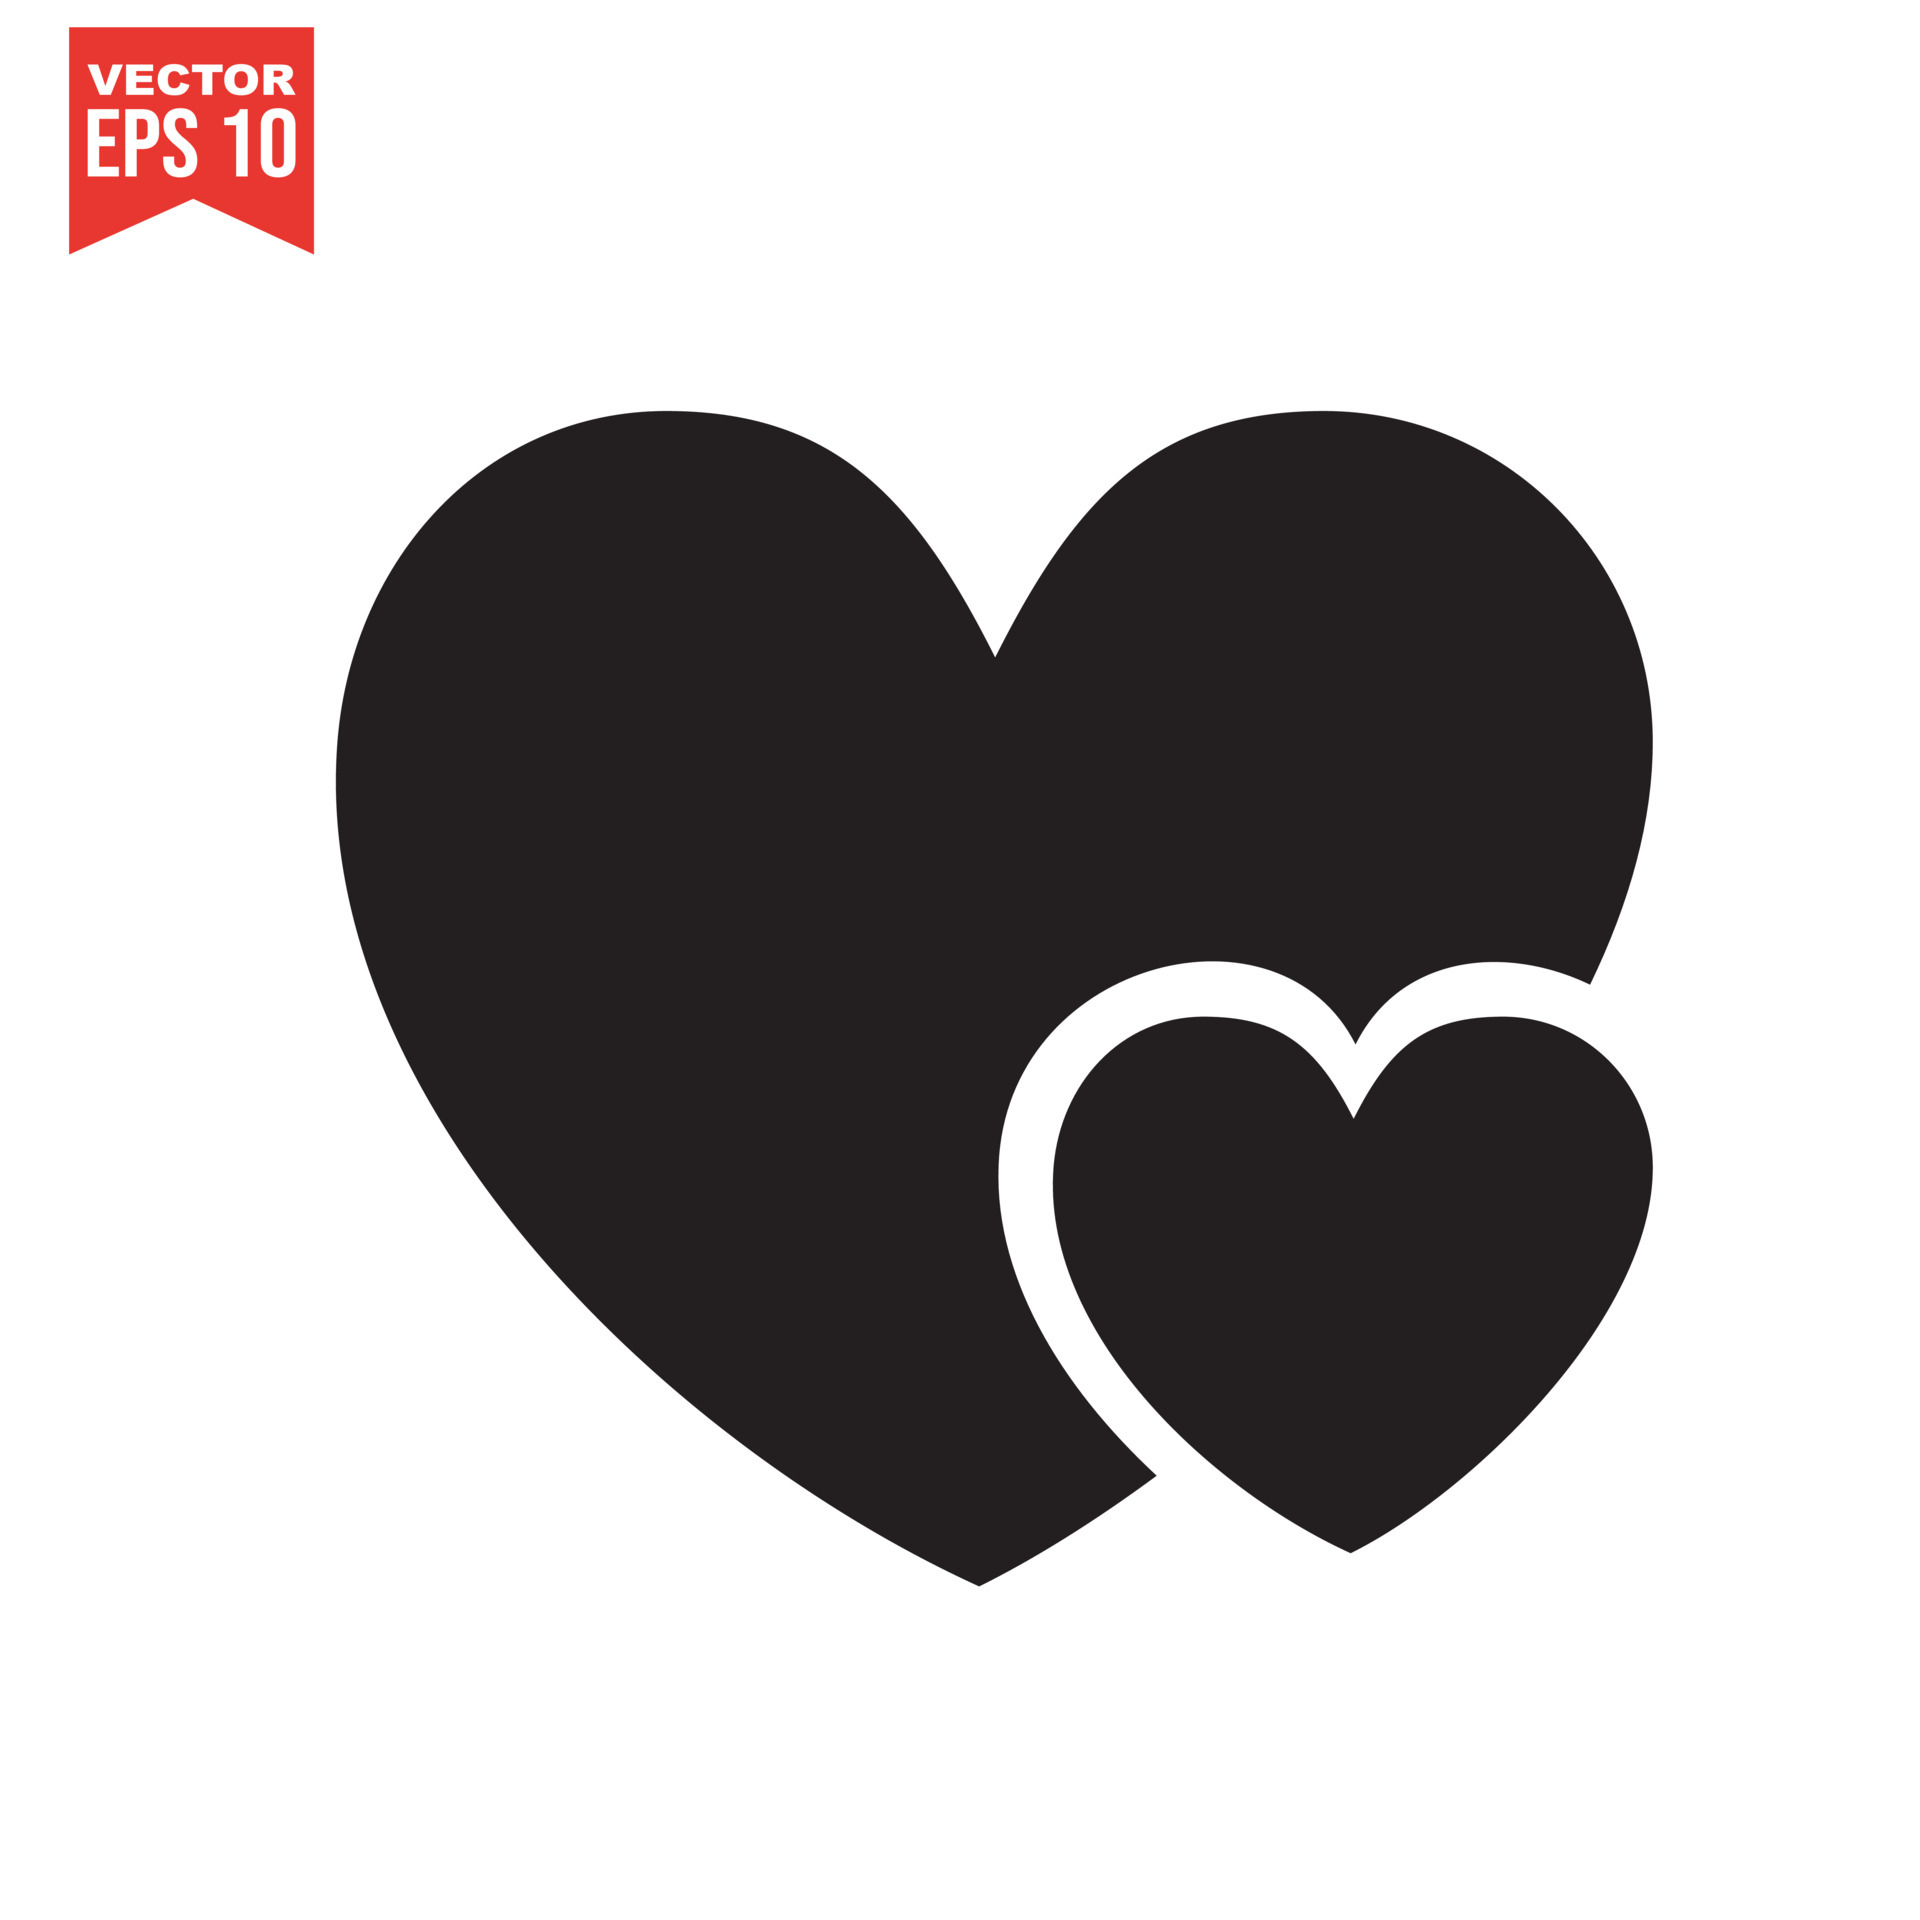 black heart icon on white background. Love logo heart illustration